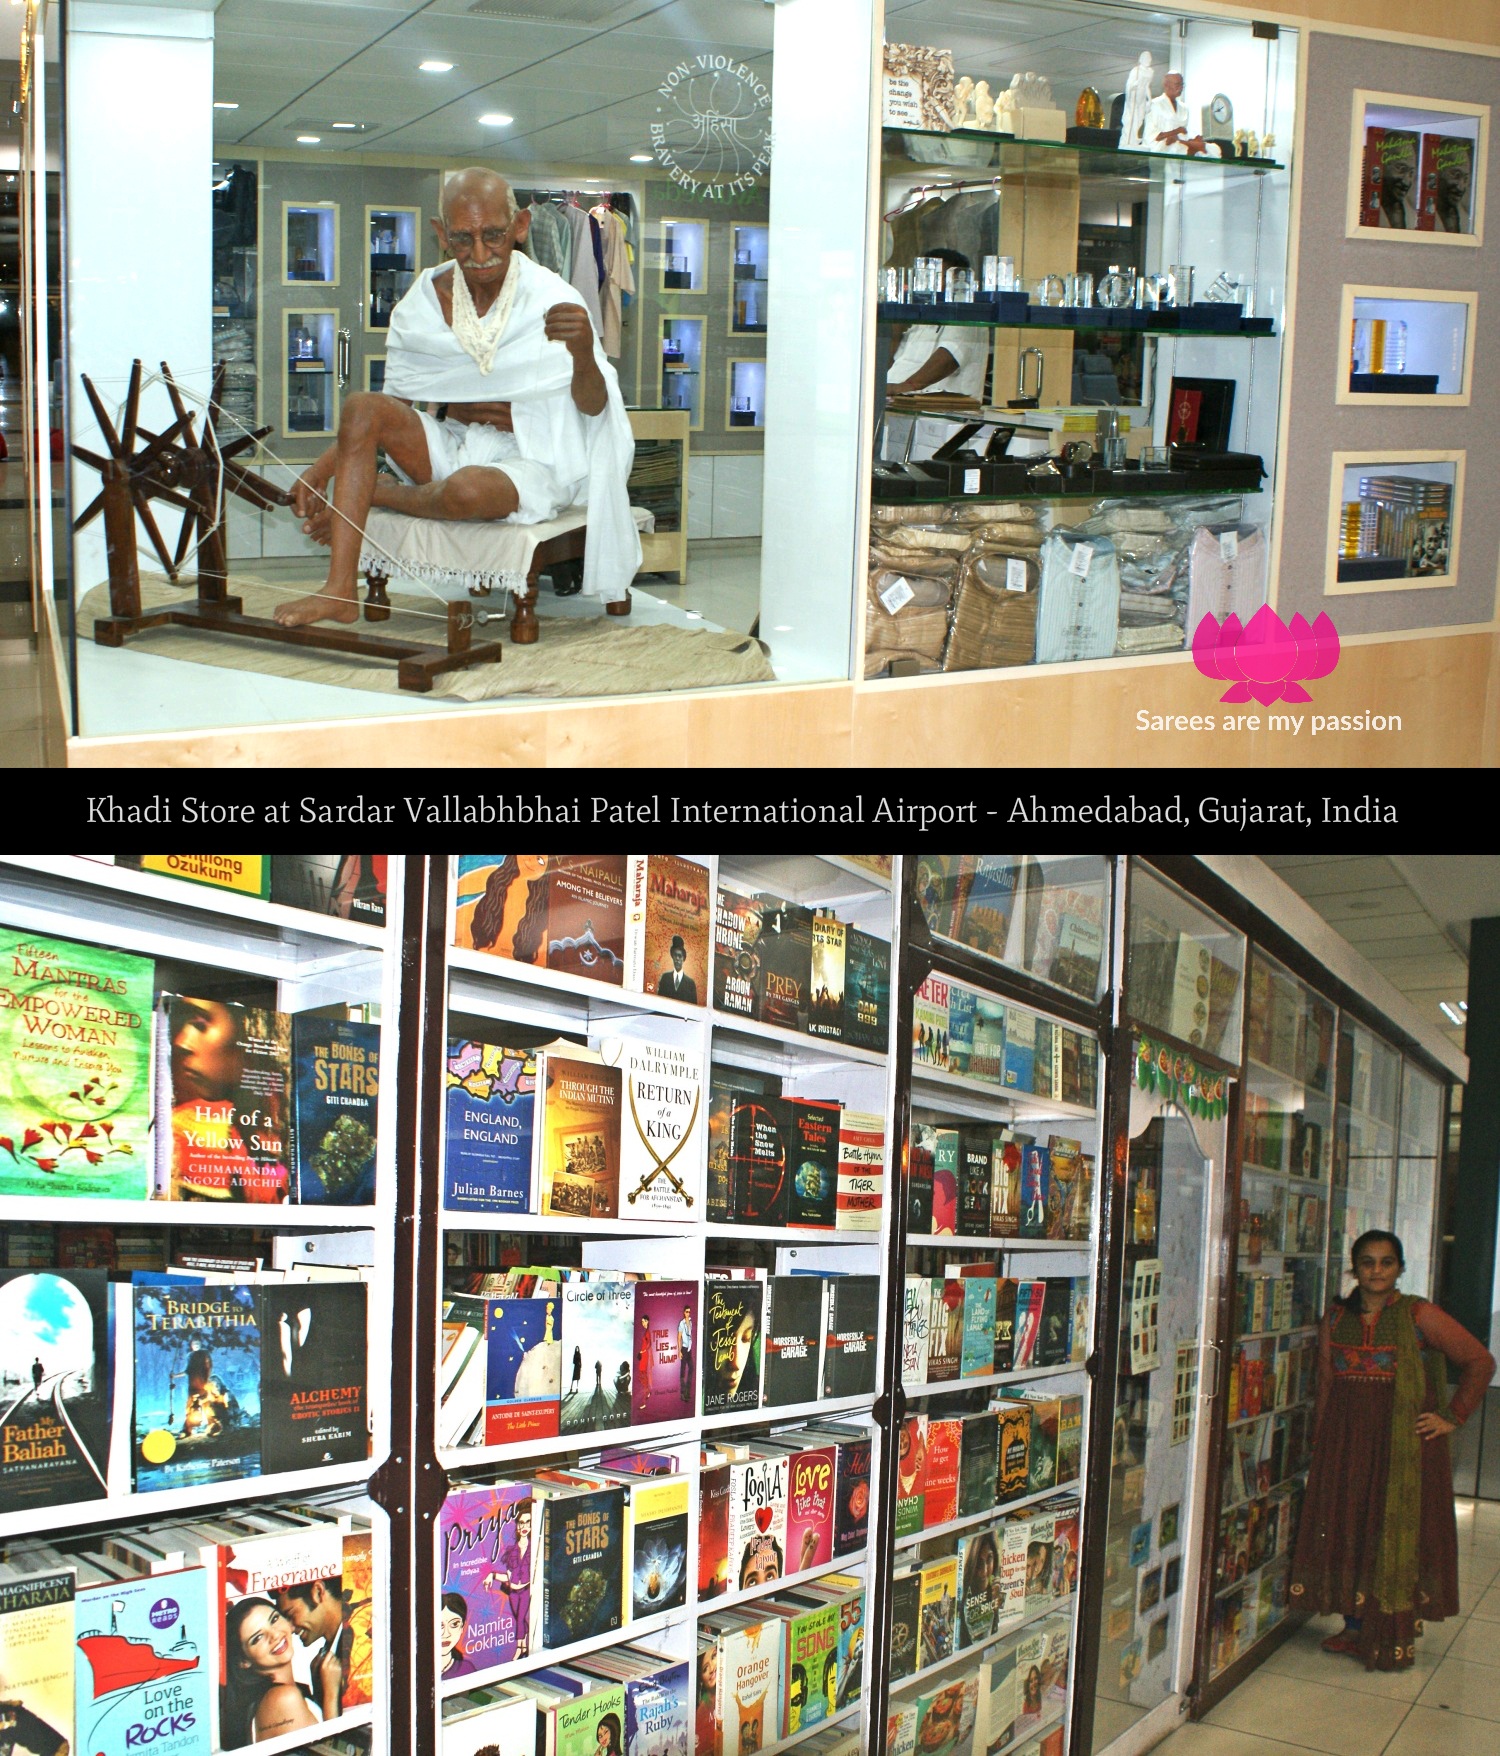 Khadi Store at Sardar Vallabhbhai Patel International Airport Ahmedabad Gujarat India - Sarees are my passion